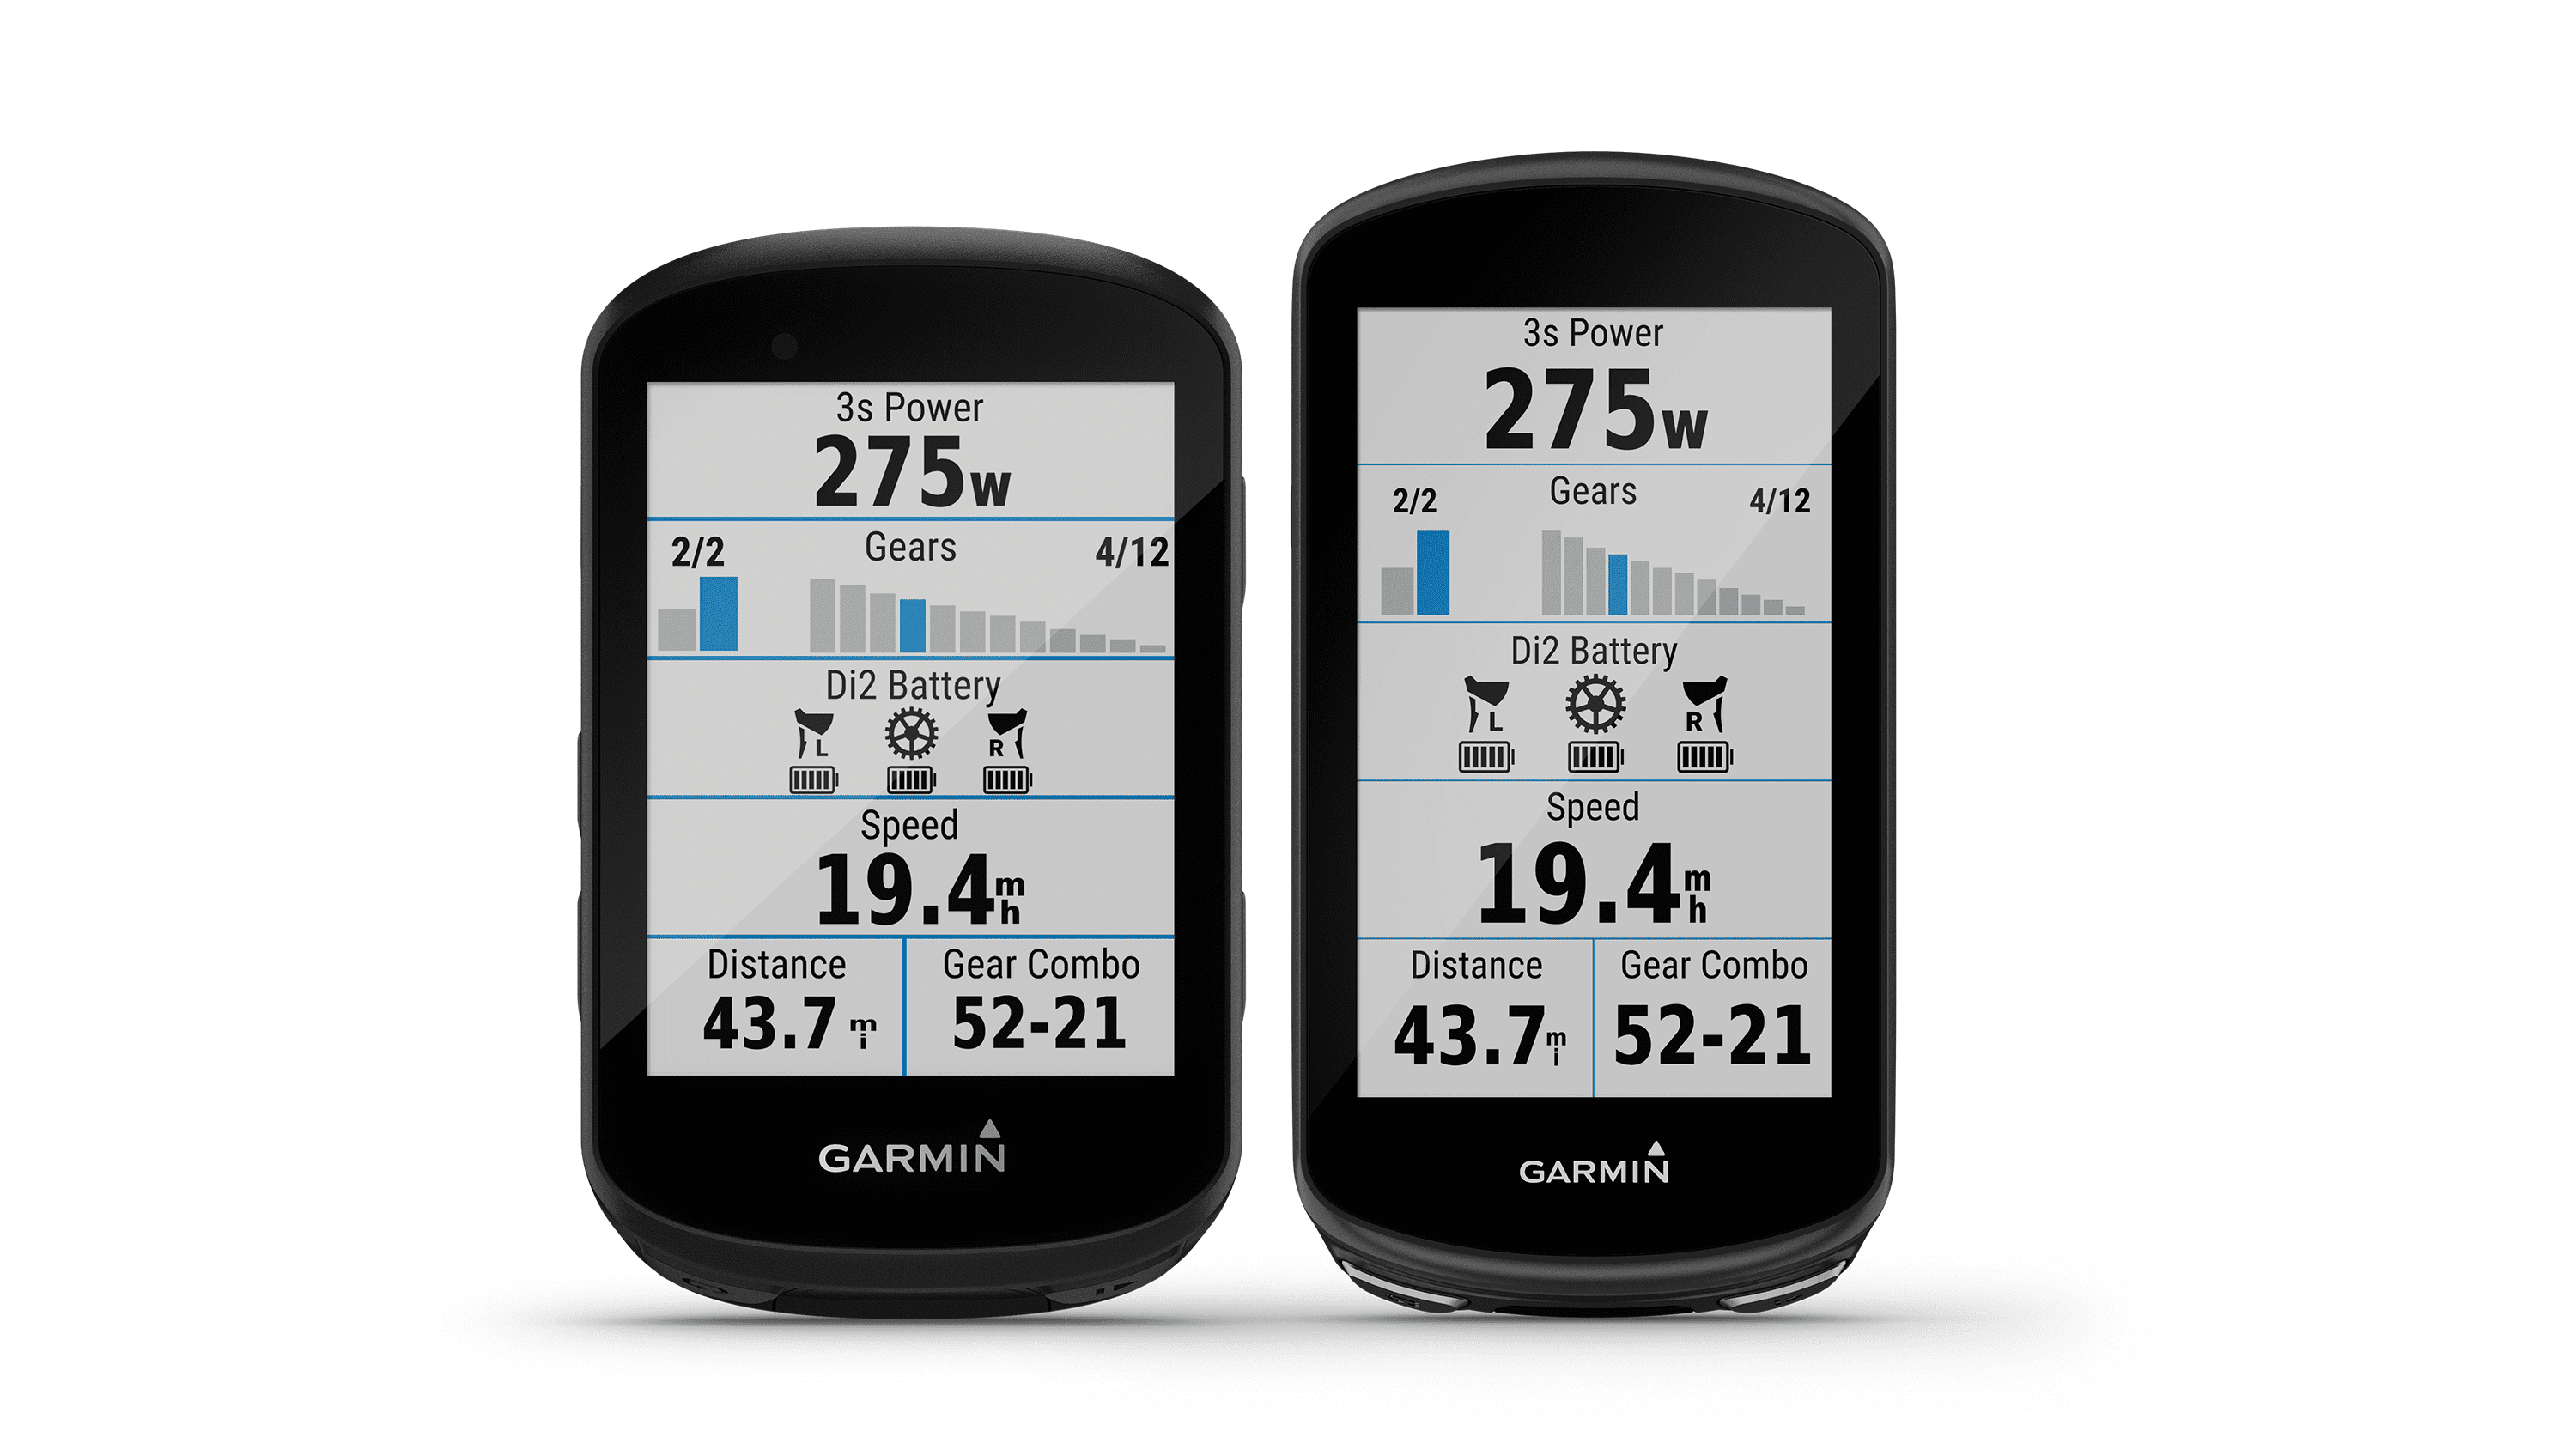 Garmin cycling computers updated for Shimano - Canadian Cycling Magazine